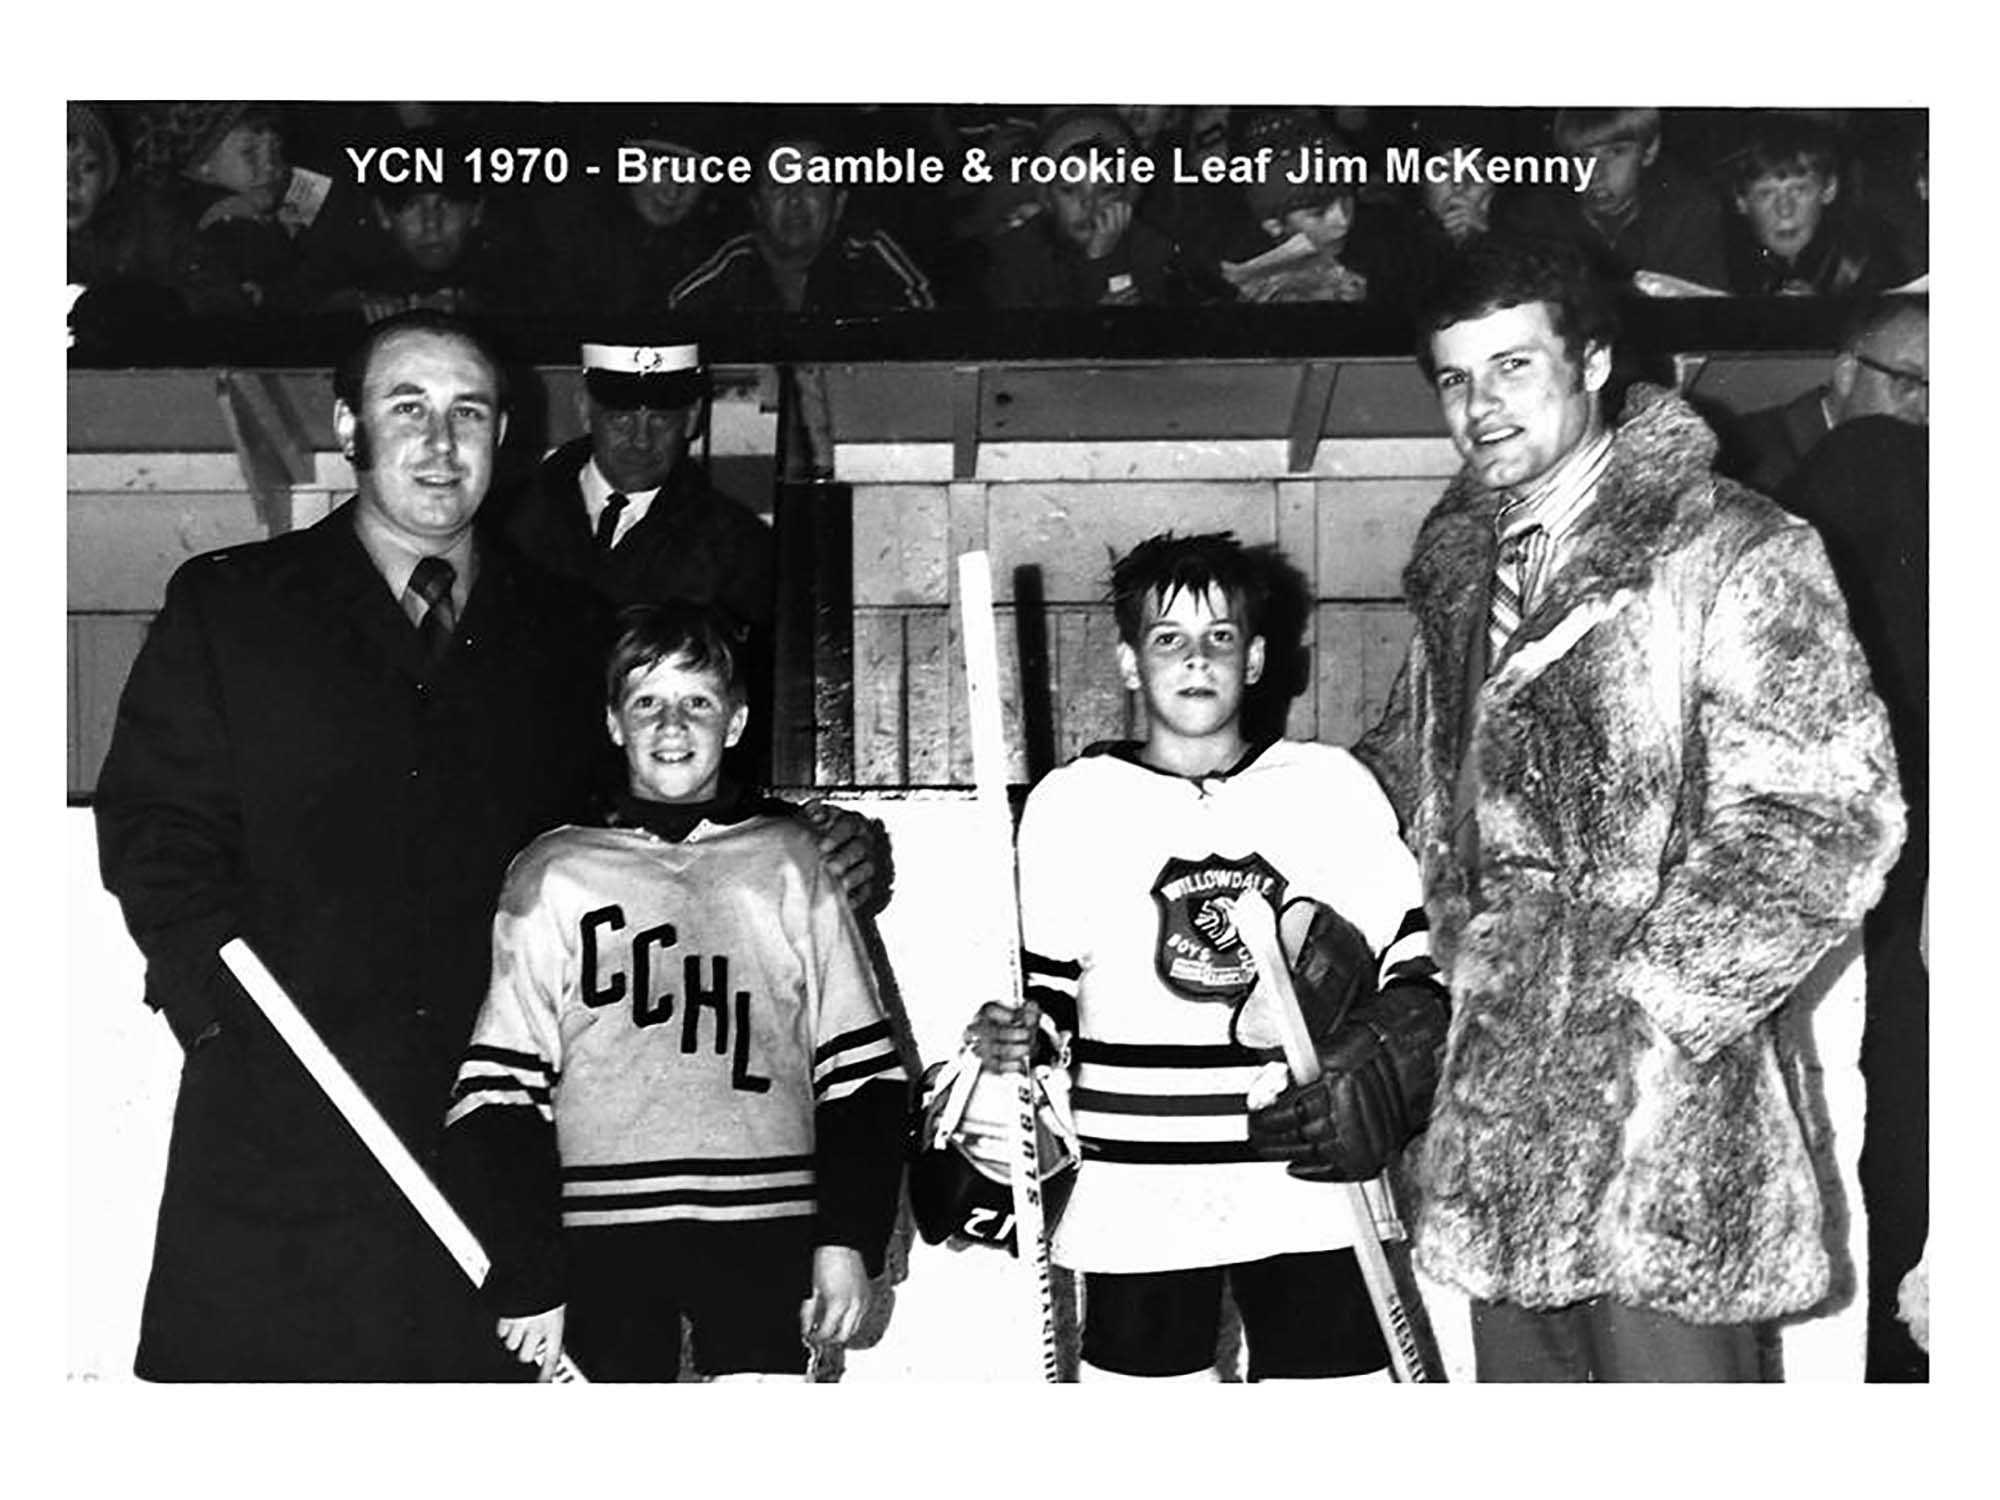 YCN-70-Bruce Gamble & Rookie Leaf Jim McKenny